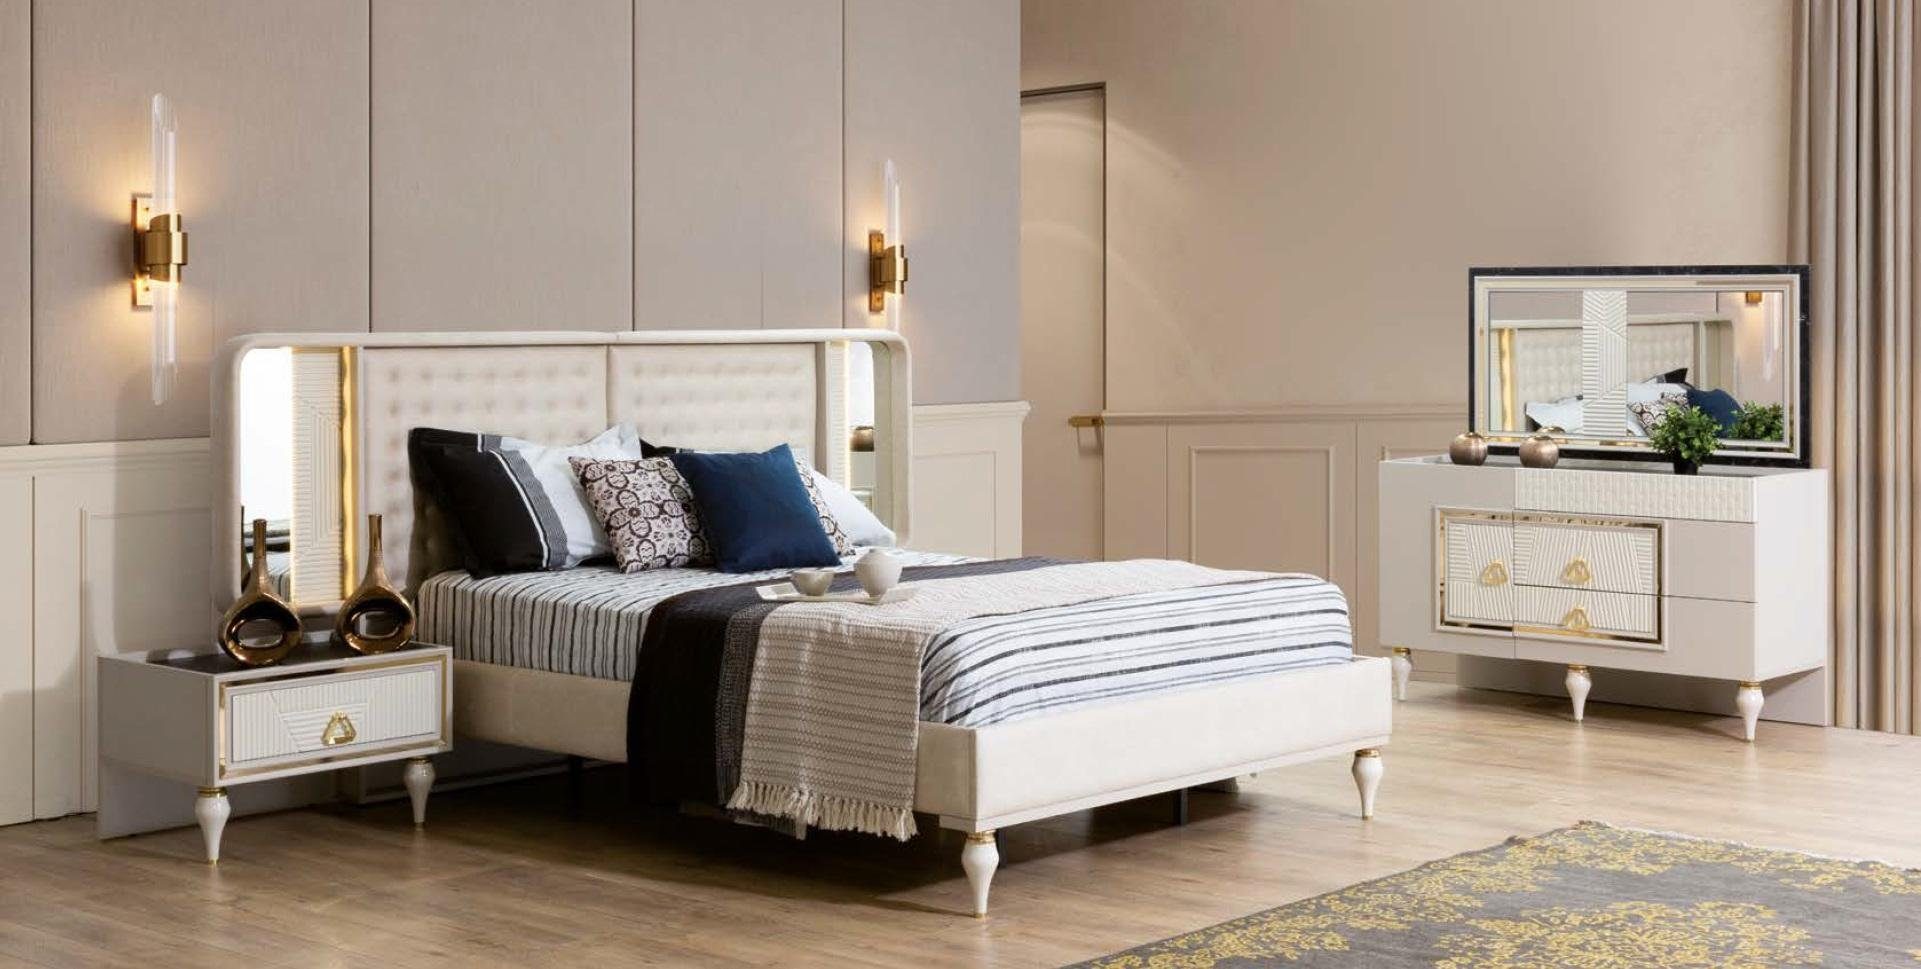 JVmoebel Bett Bett Bettgestelle Doppelbett Bettrahmen Betten Modern Holz Luxus